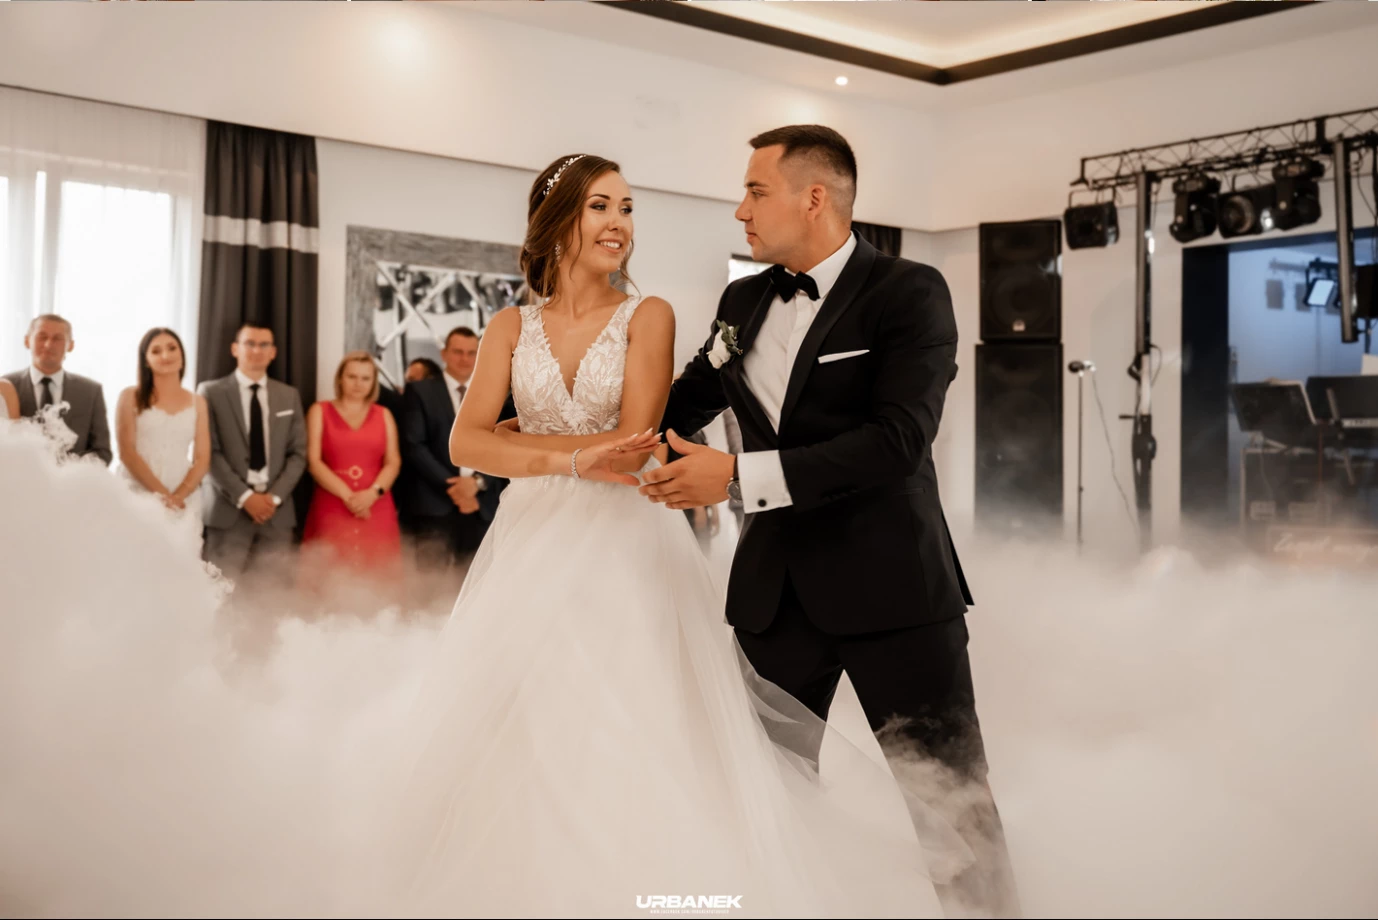 fotograf lukow urbanek-foto-video portfolio zdjecia slubne inspiracje wesele plener slubny sesja slubna